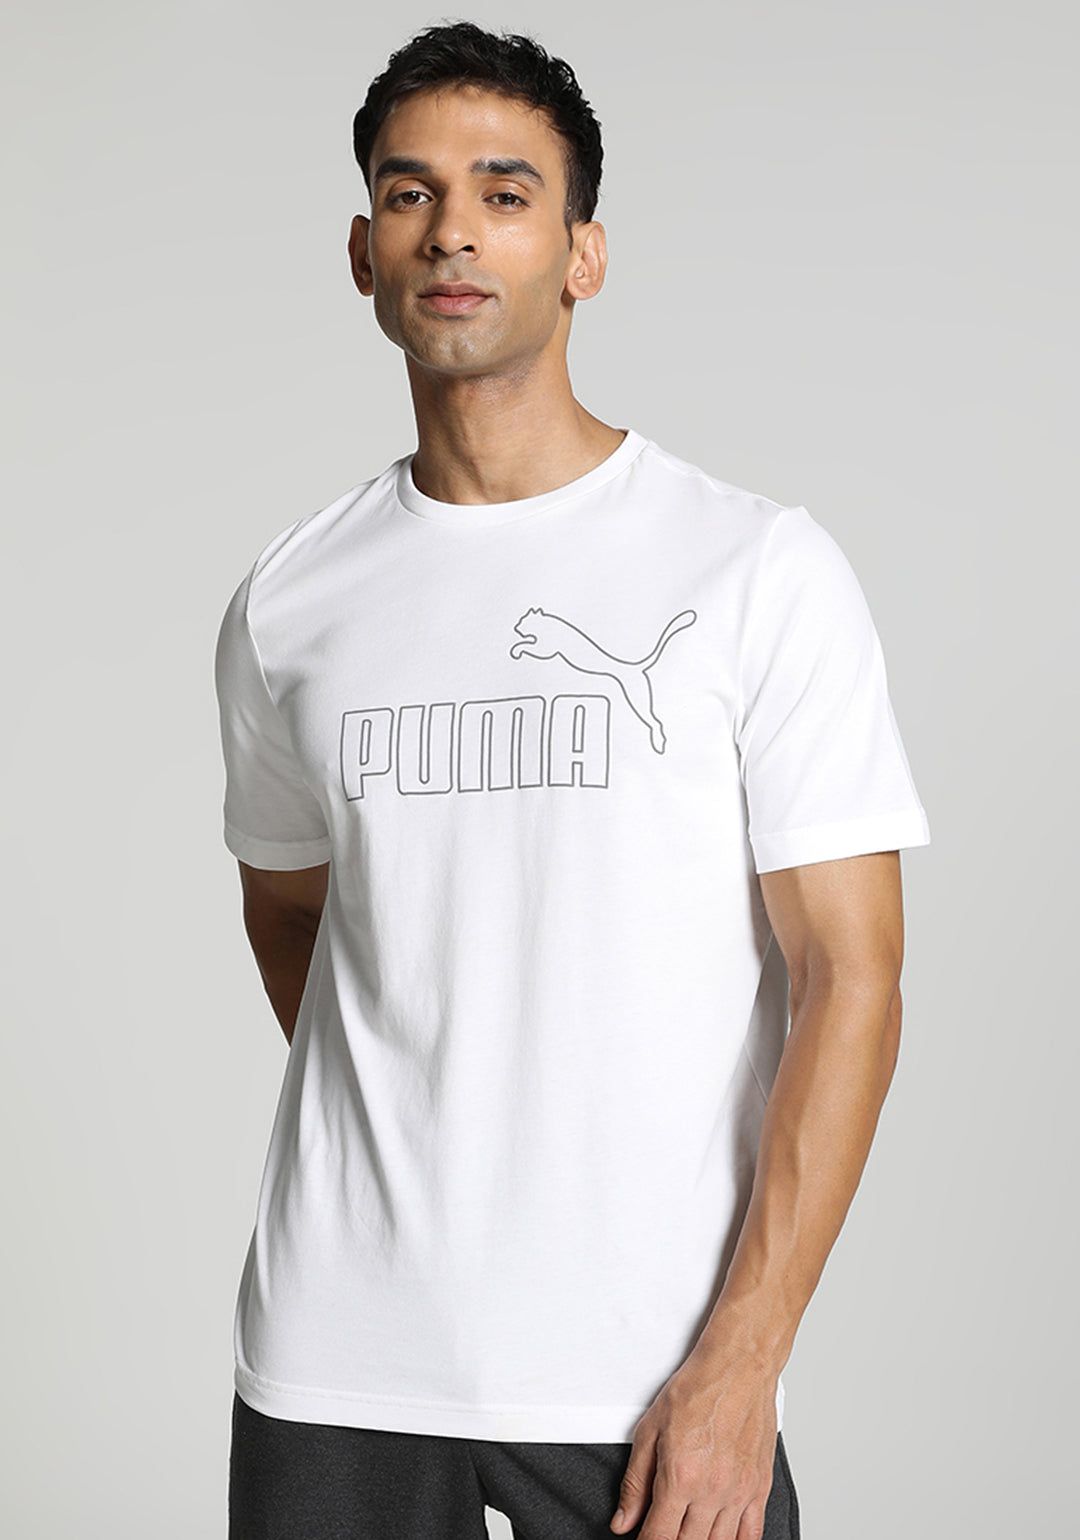 & Online Buy Shirts | T T-Shirts T-Shirts shop Official Merchandise: Jerseys